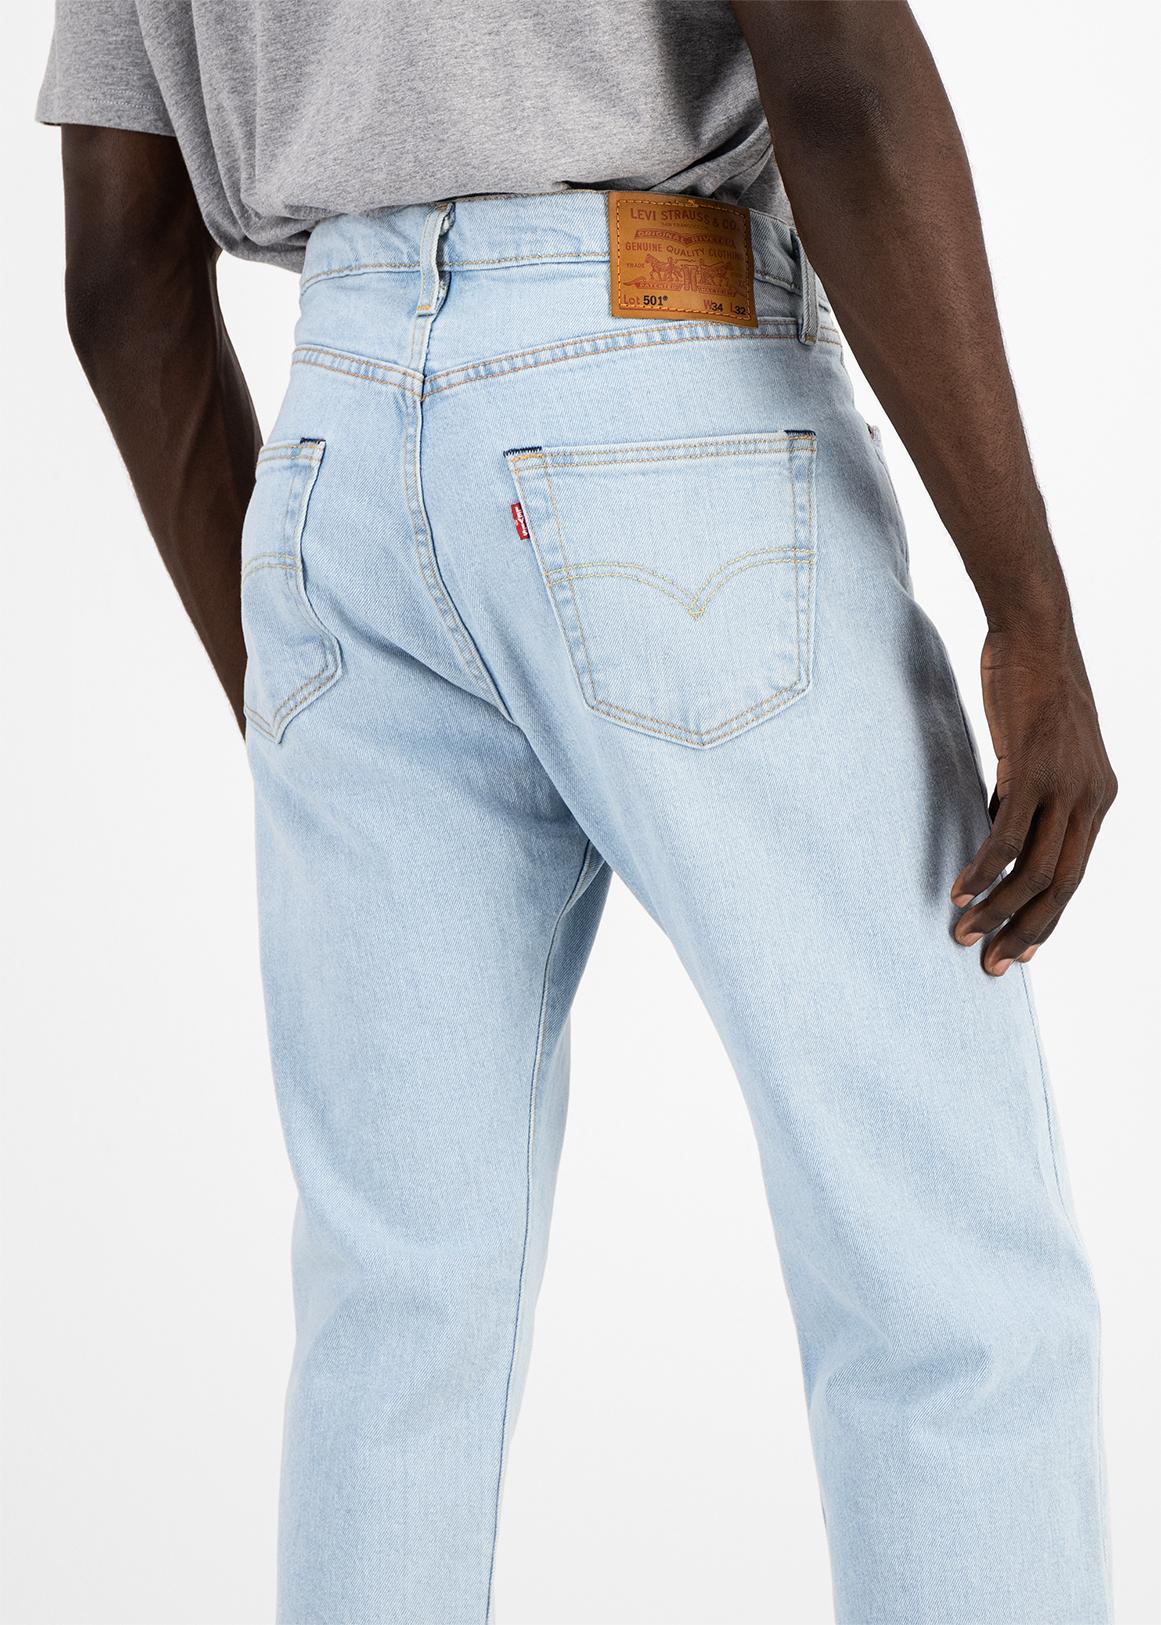 Levi's 501 Slim Taper Jeans